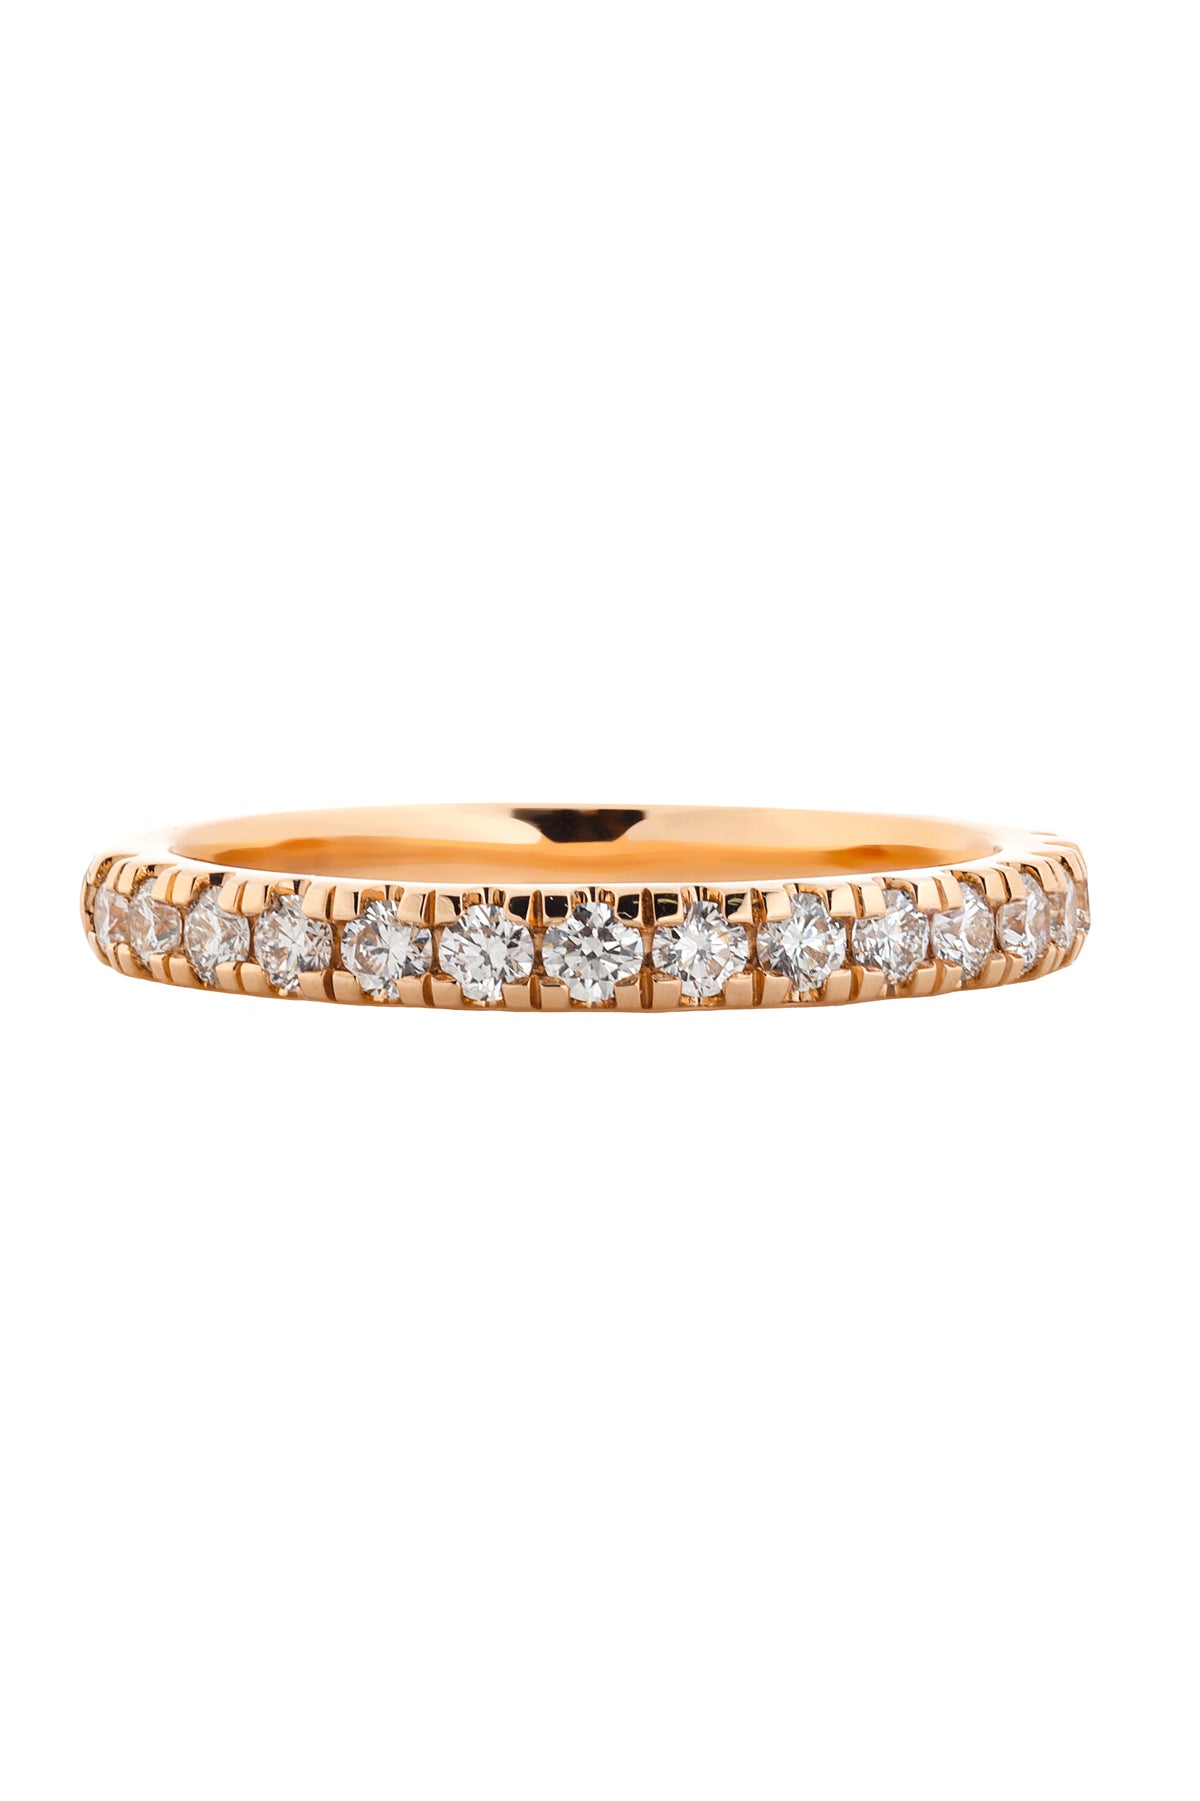 18 Carat Rose Gold Claw Set Diamond Band available at LeGassick Diamonds and Jewellery Gold Coast, Australia.